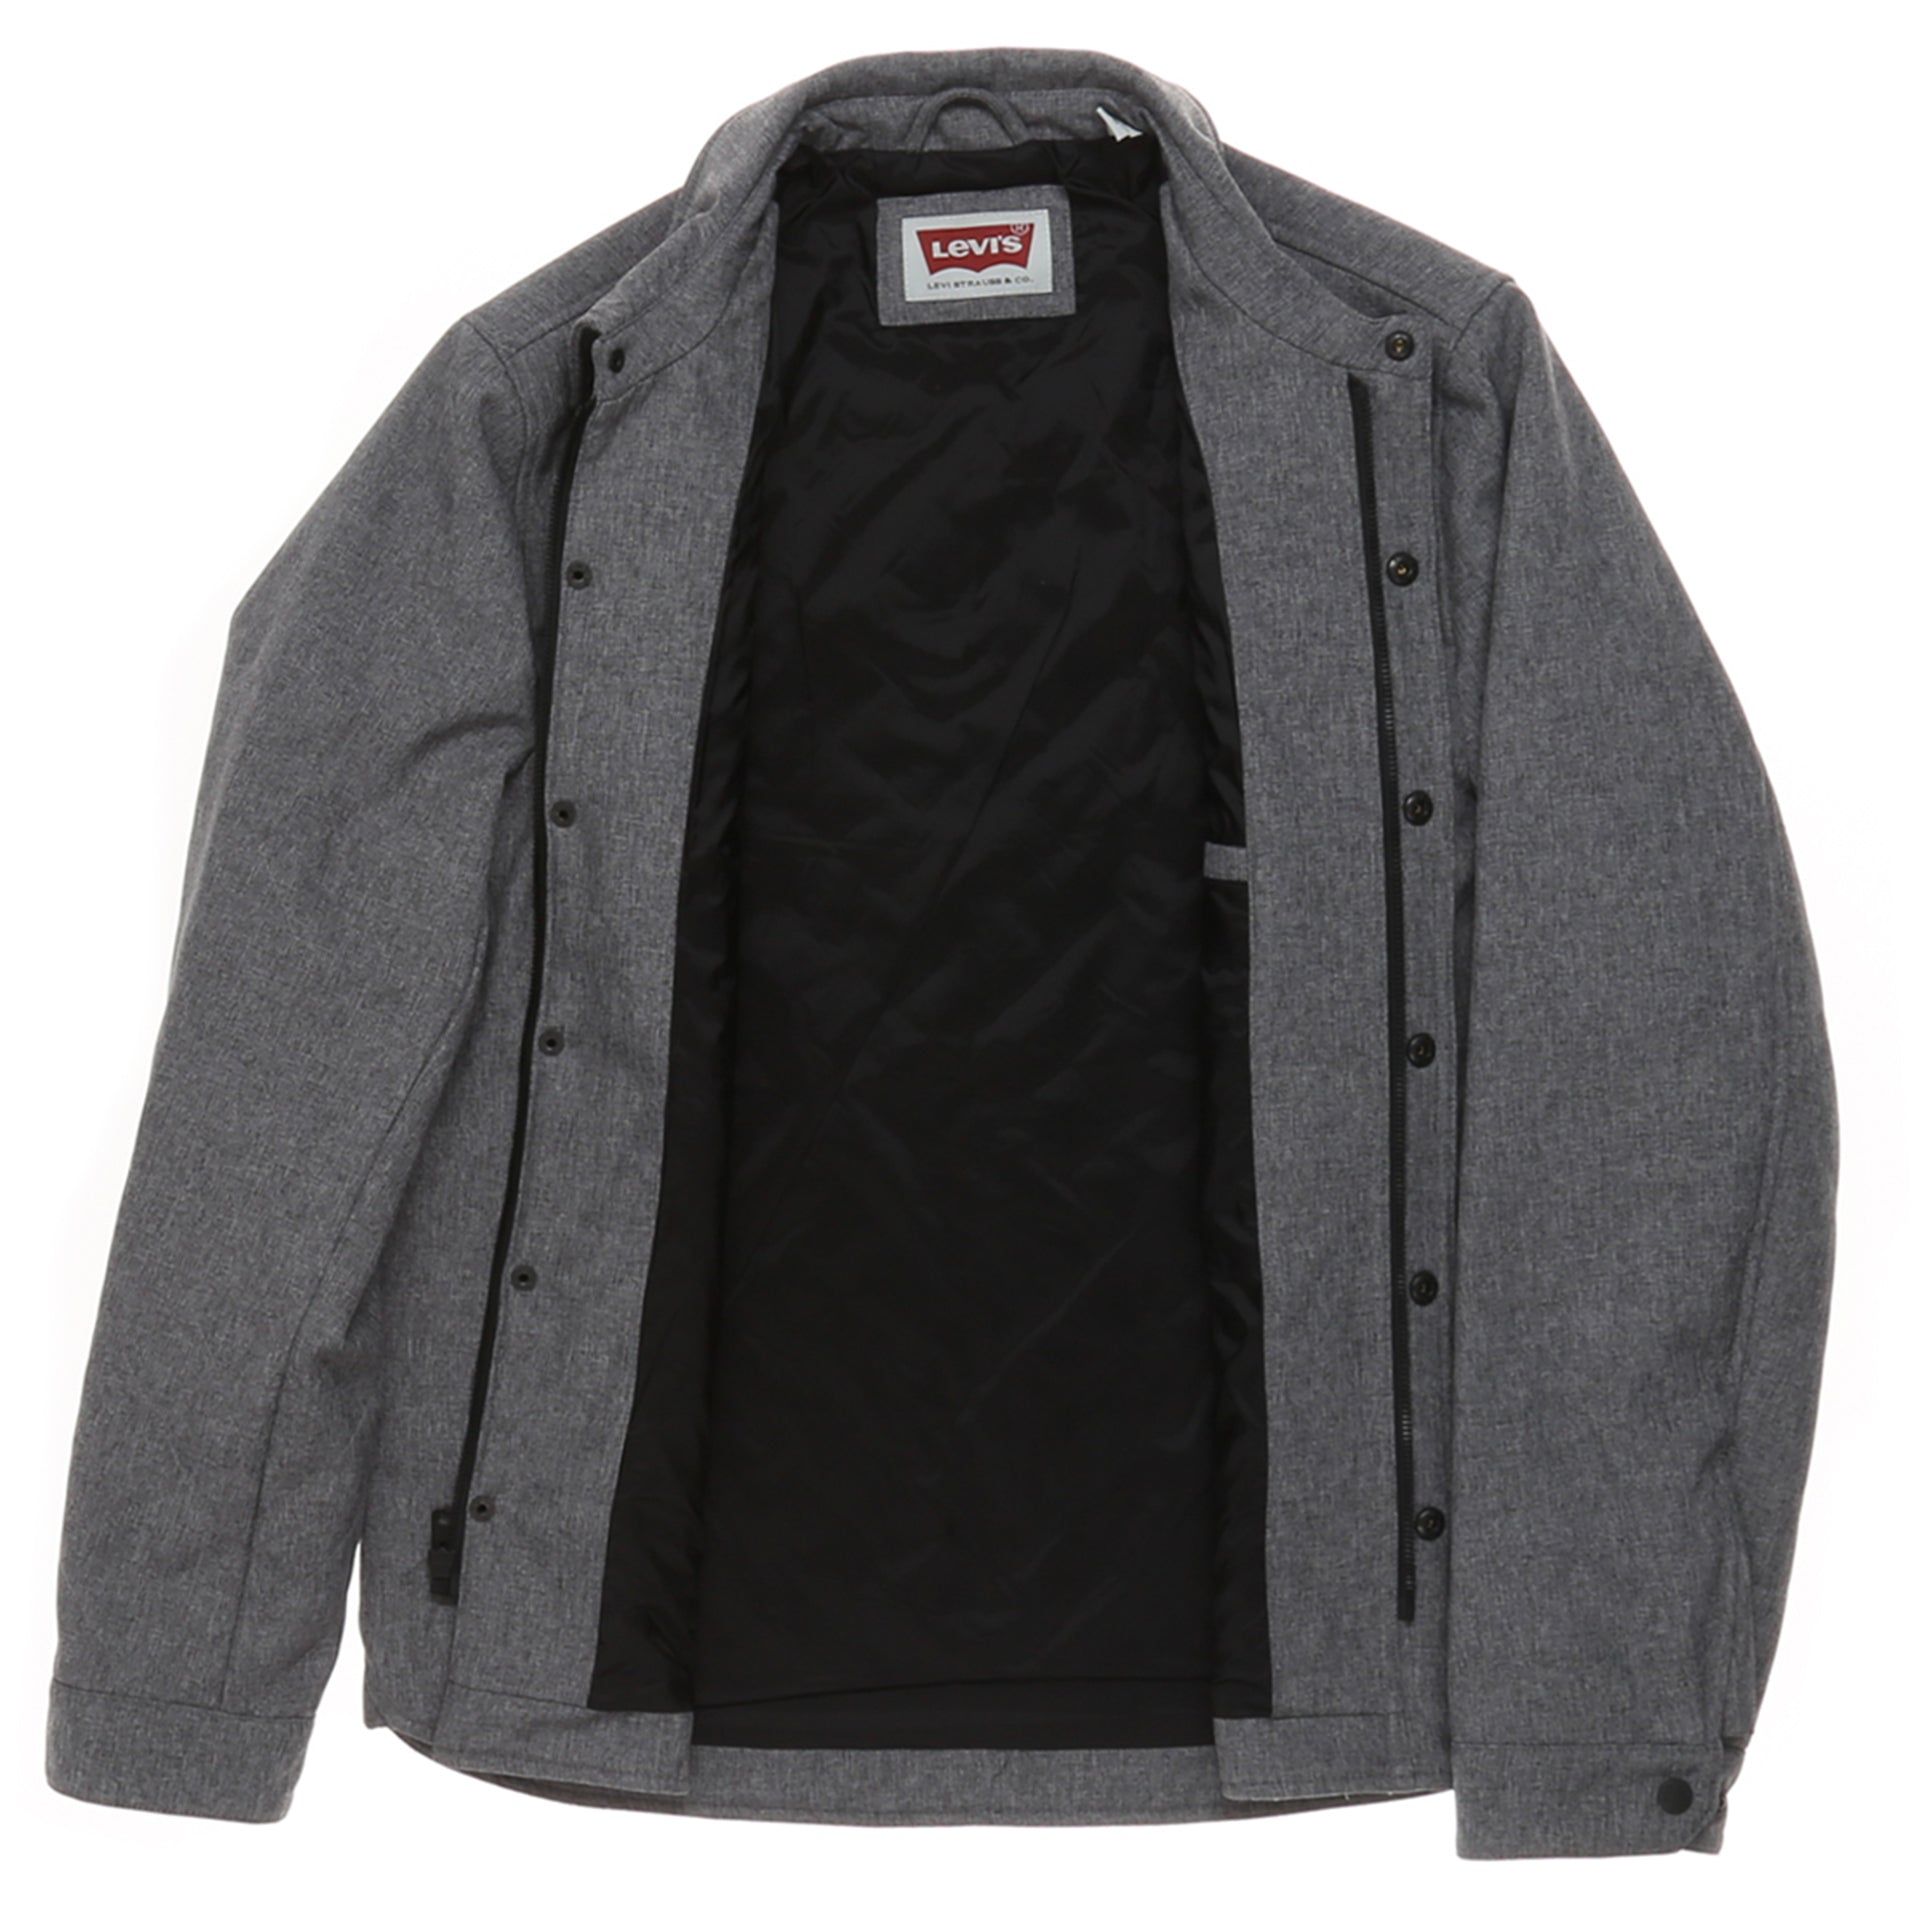 Levi's Soft Shell Two Pocket Shirt Jacket - Heather Grey - New Star